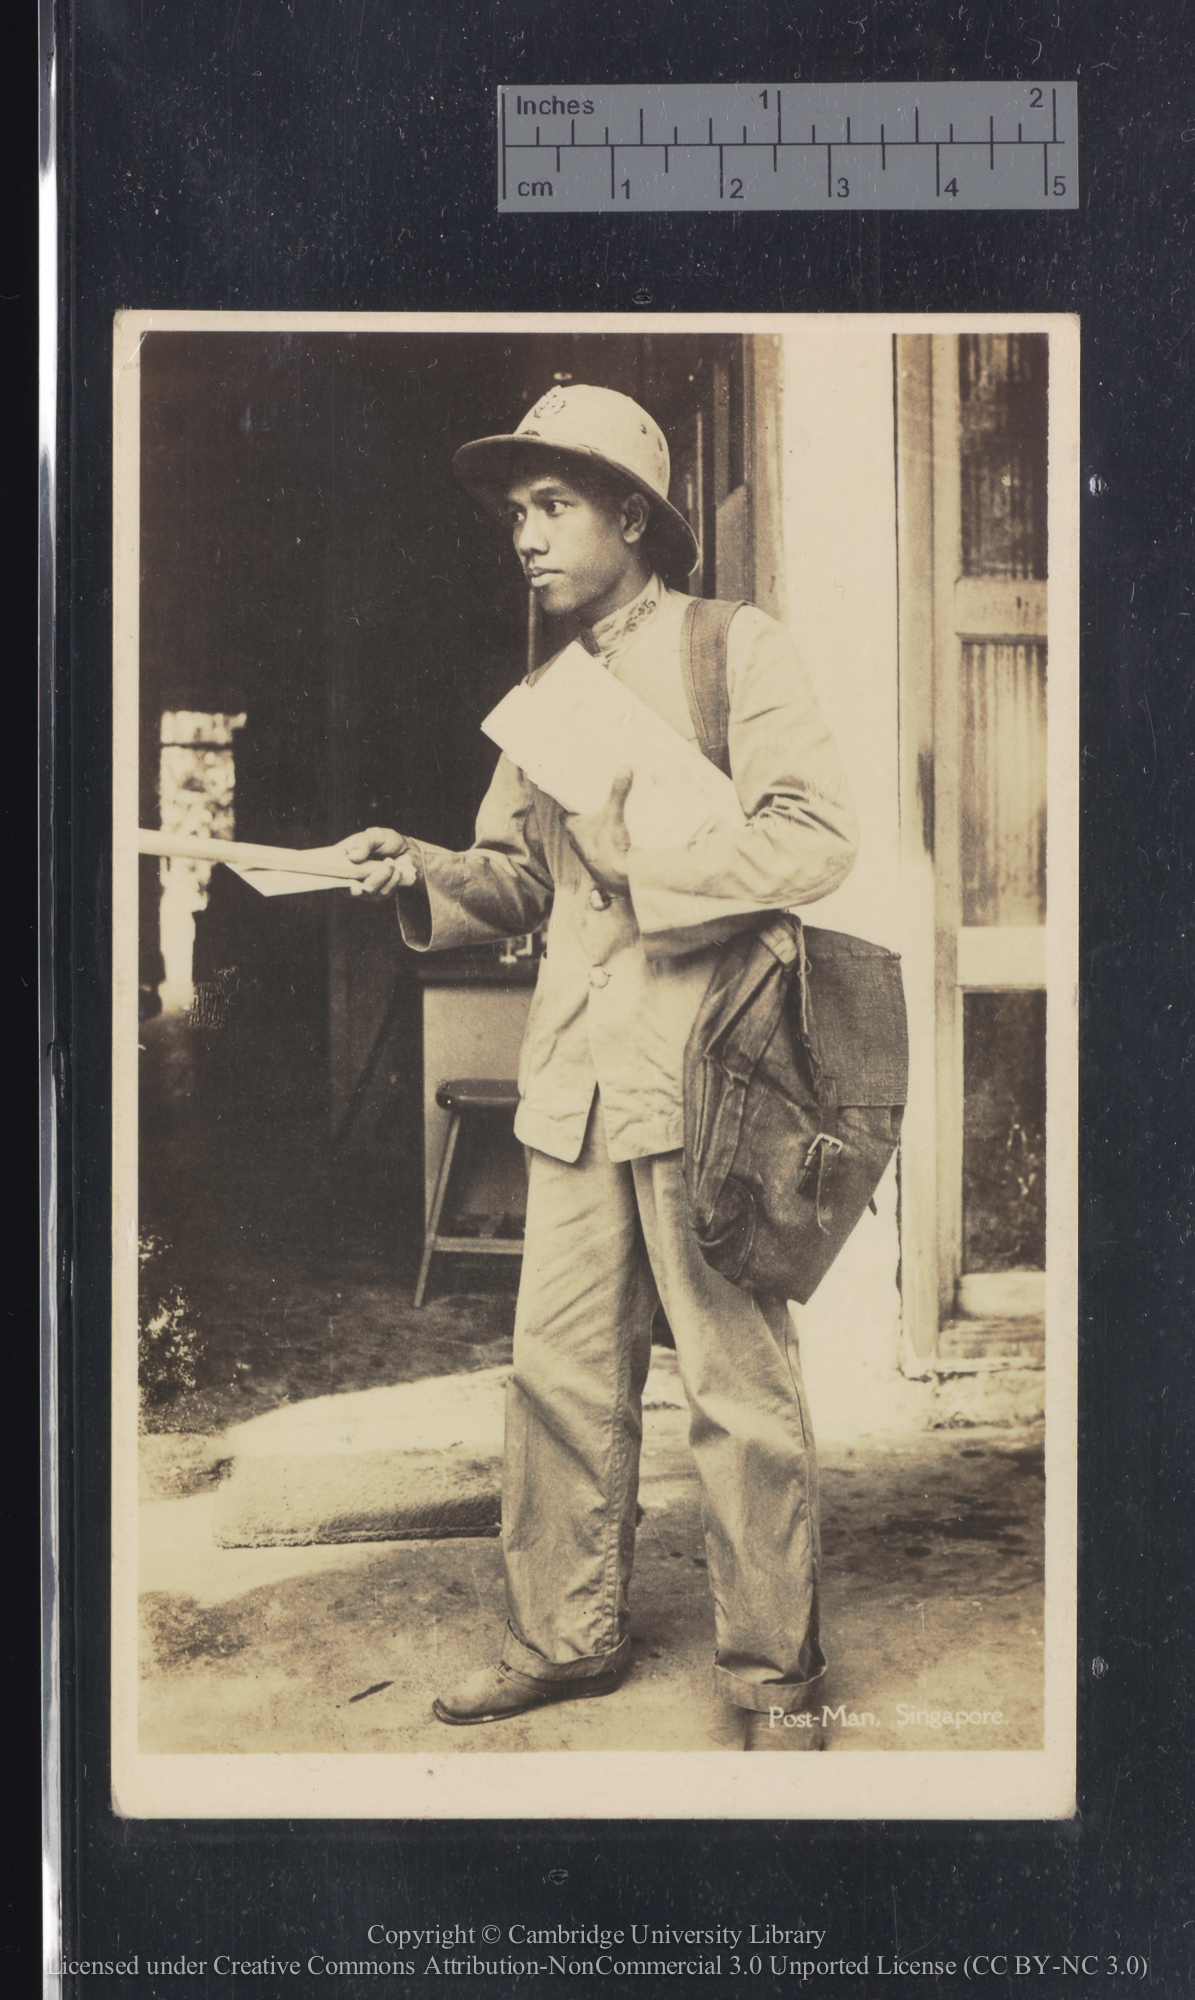 Singapore postman, 1930 - 1939